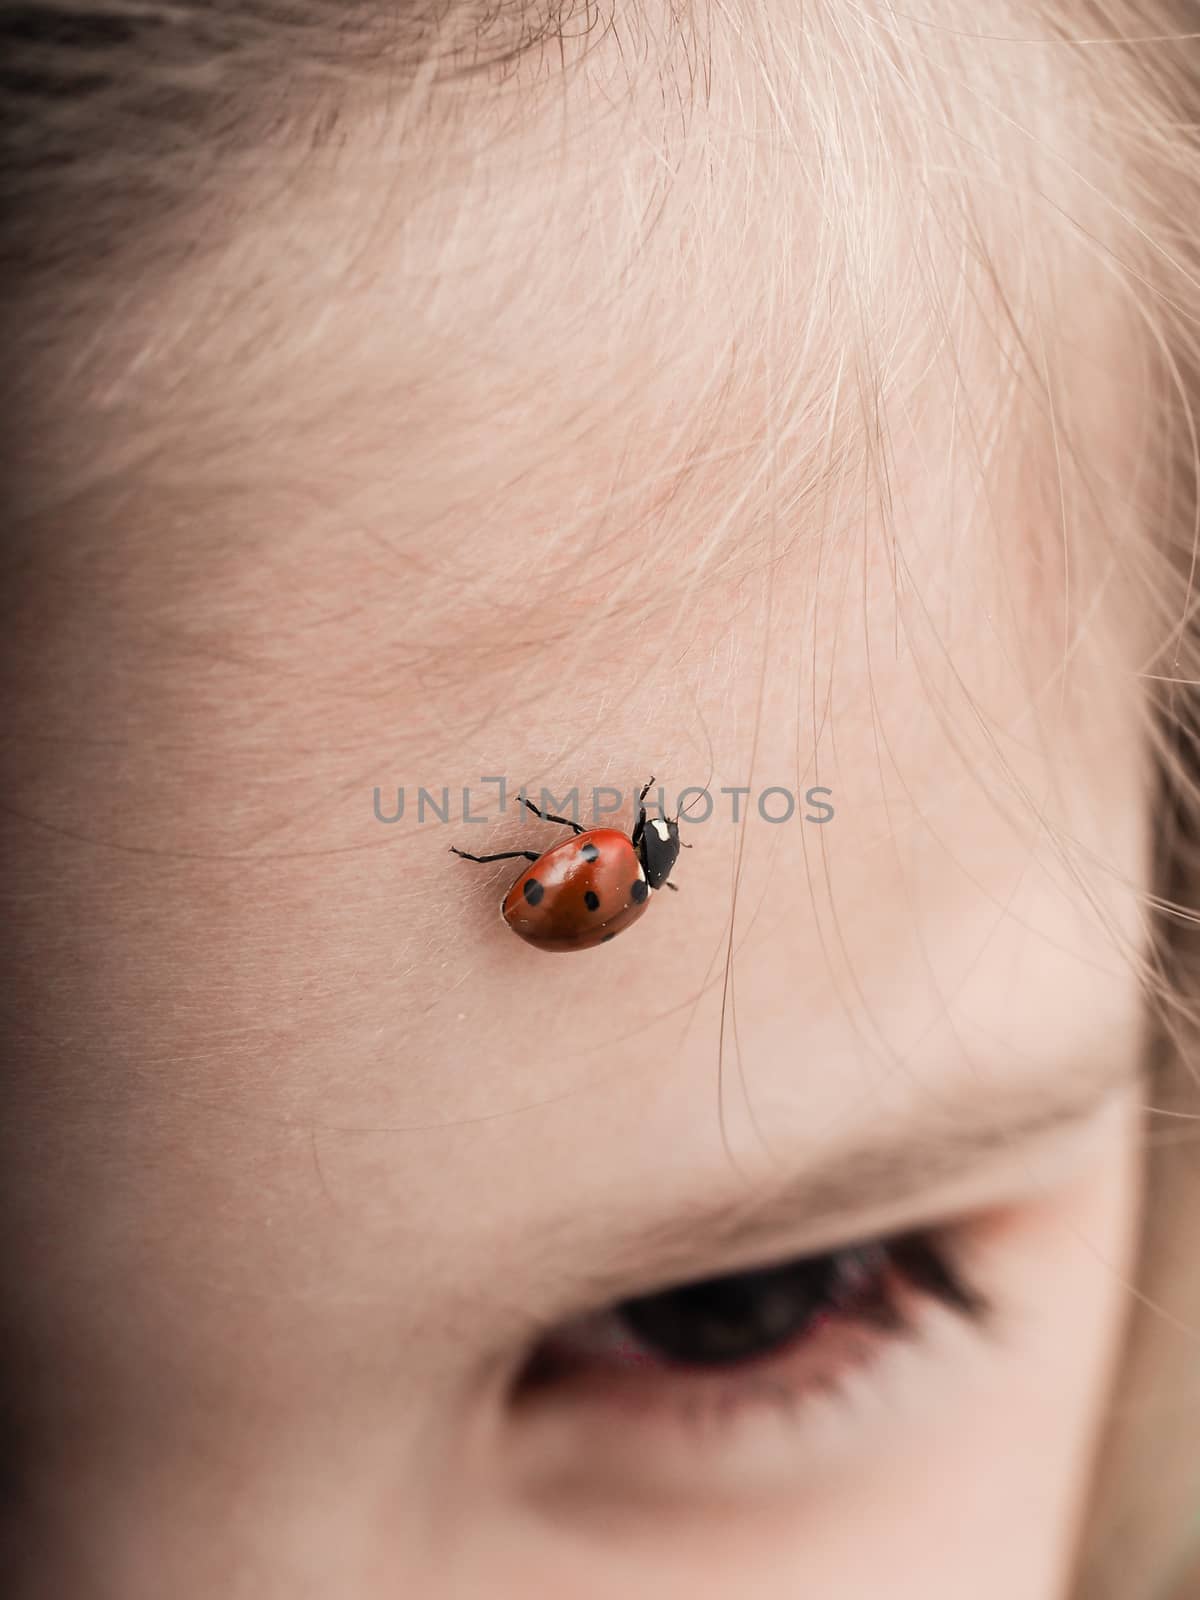 Ladybird bug walking across forehead of a girl by Arvebettum